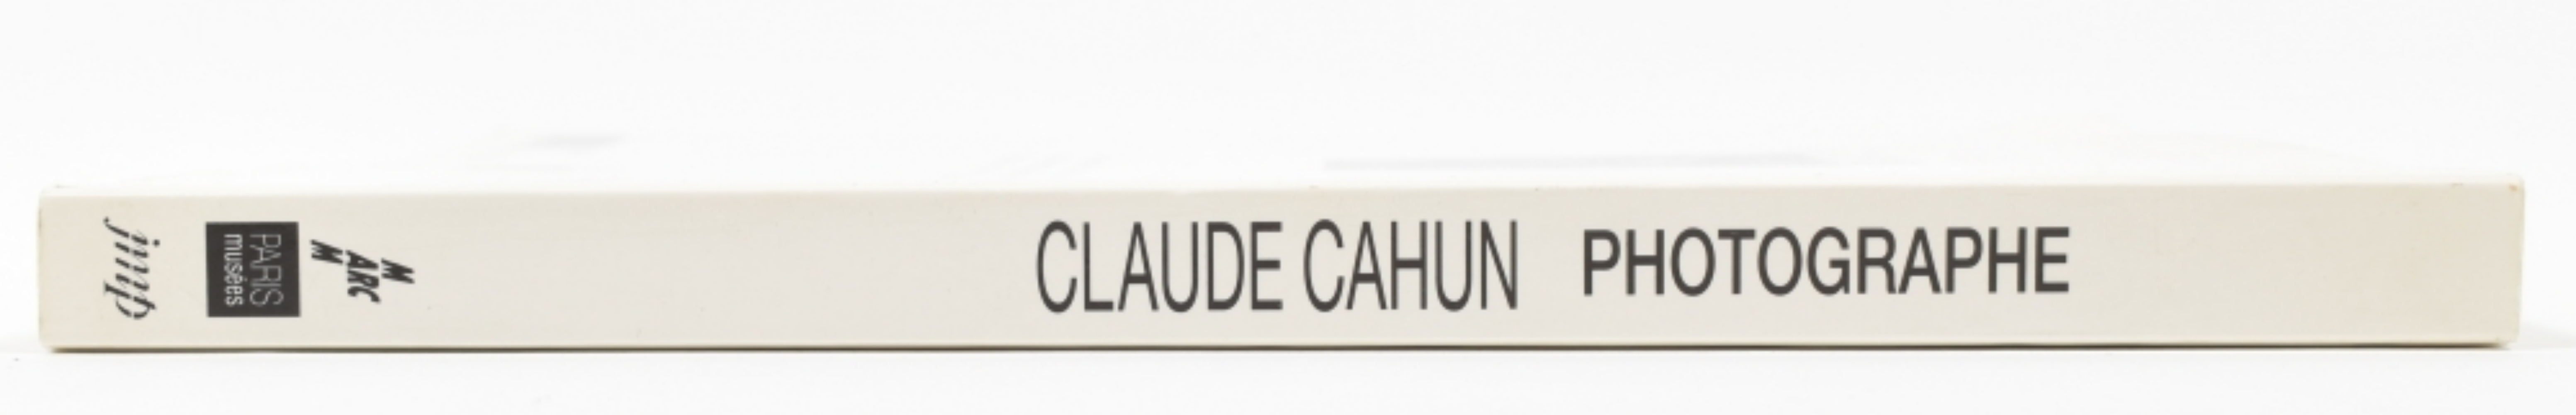 Claude Cahun, Photographe - Image 2 of 6